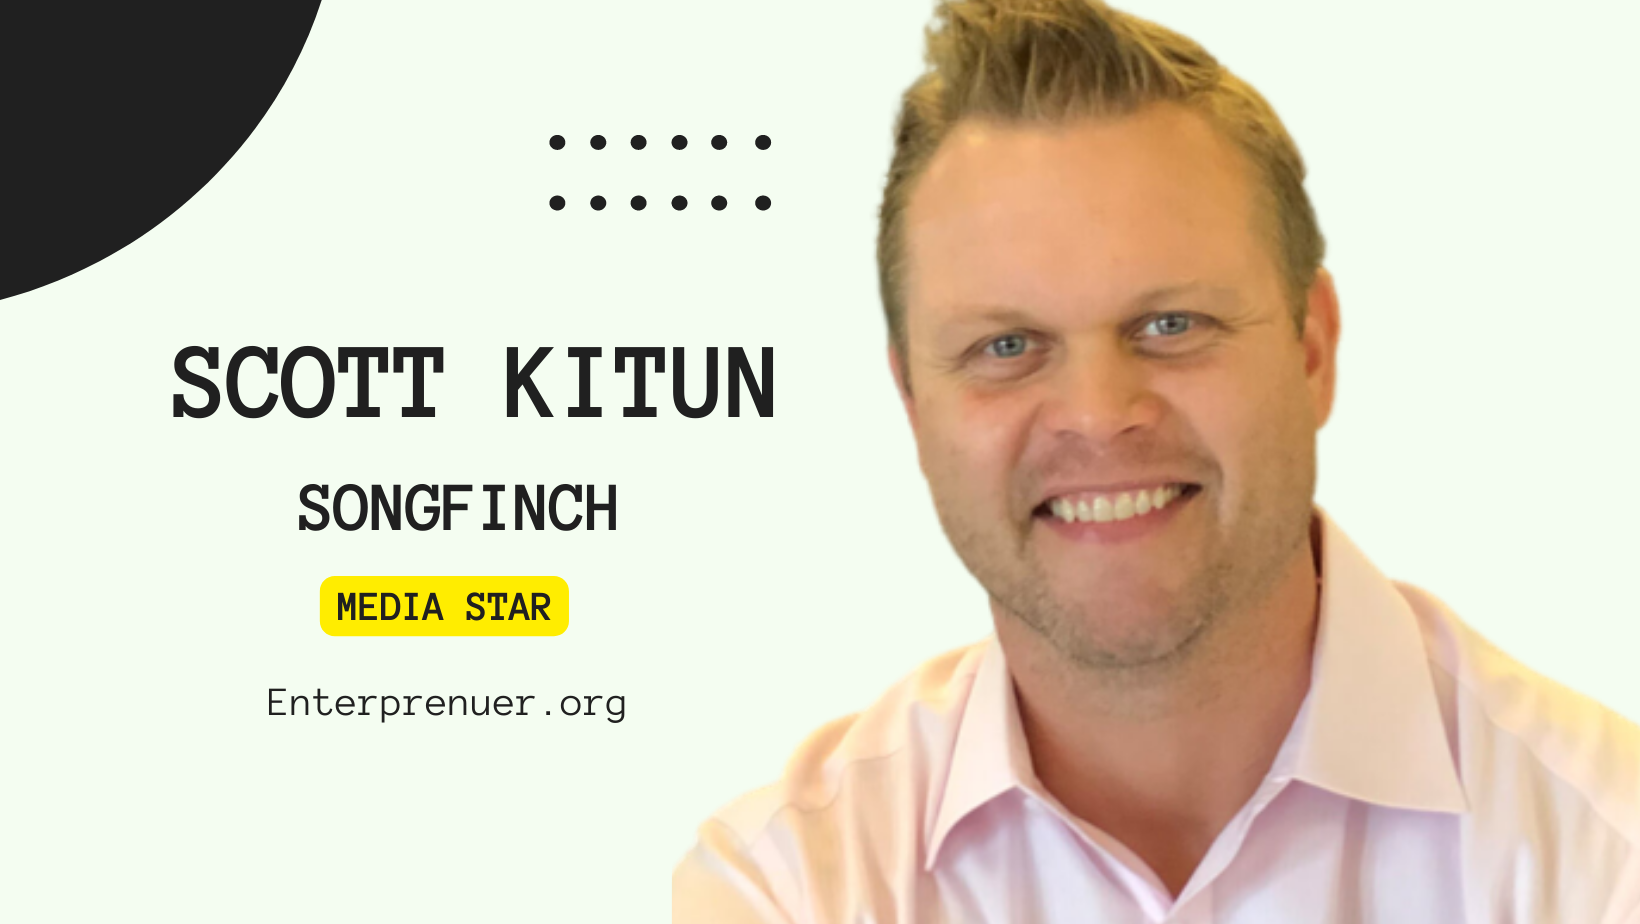 Meet Media Star Scott Kitun, Founder of Songfinch